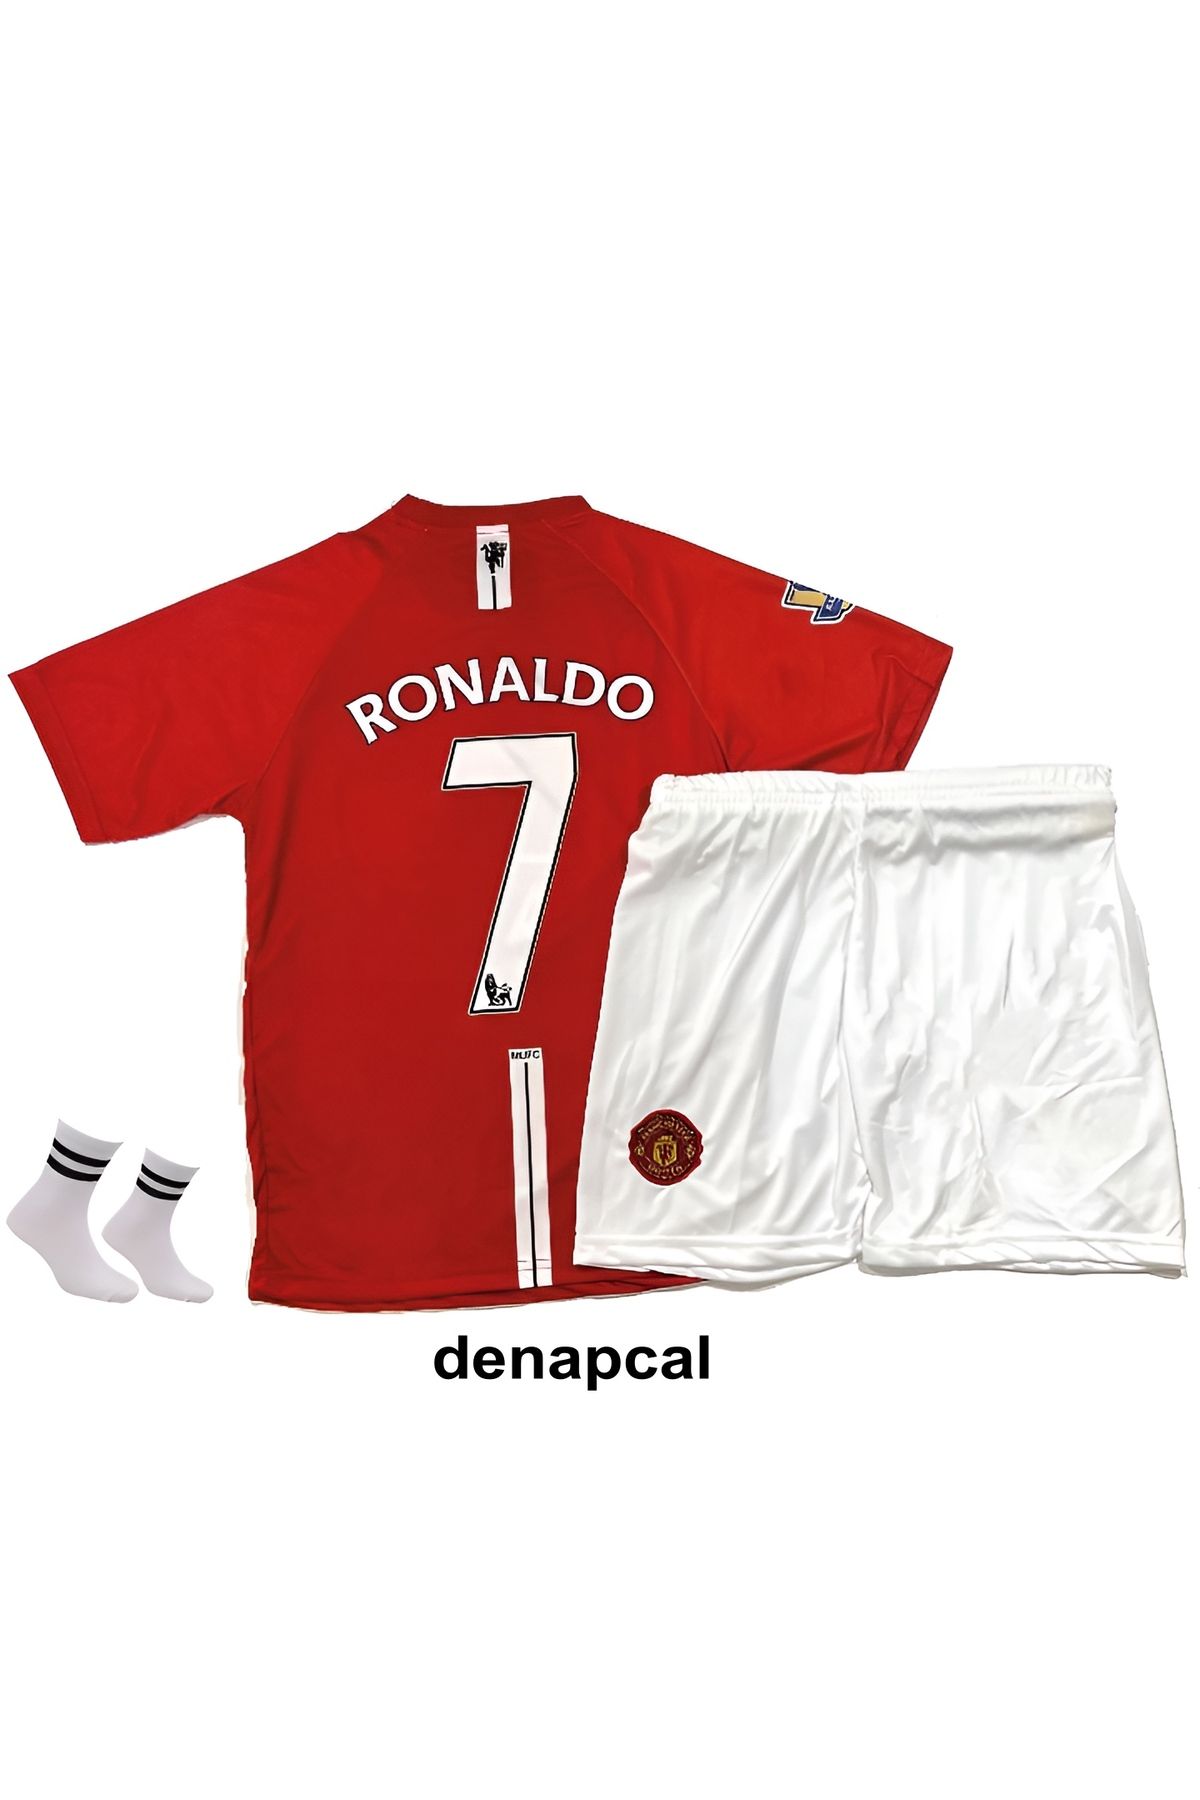 DENAPCAL Cristiano Ronaldo Retro Manchester United 2008 Moscow Şampiyonlar Ligi Finali Çoçuk Forma Seti